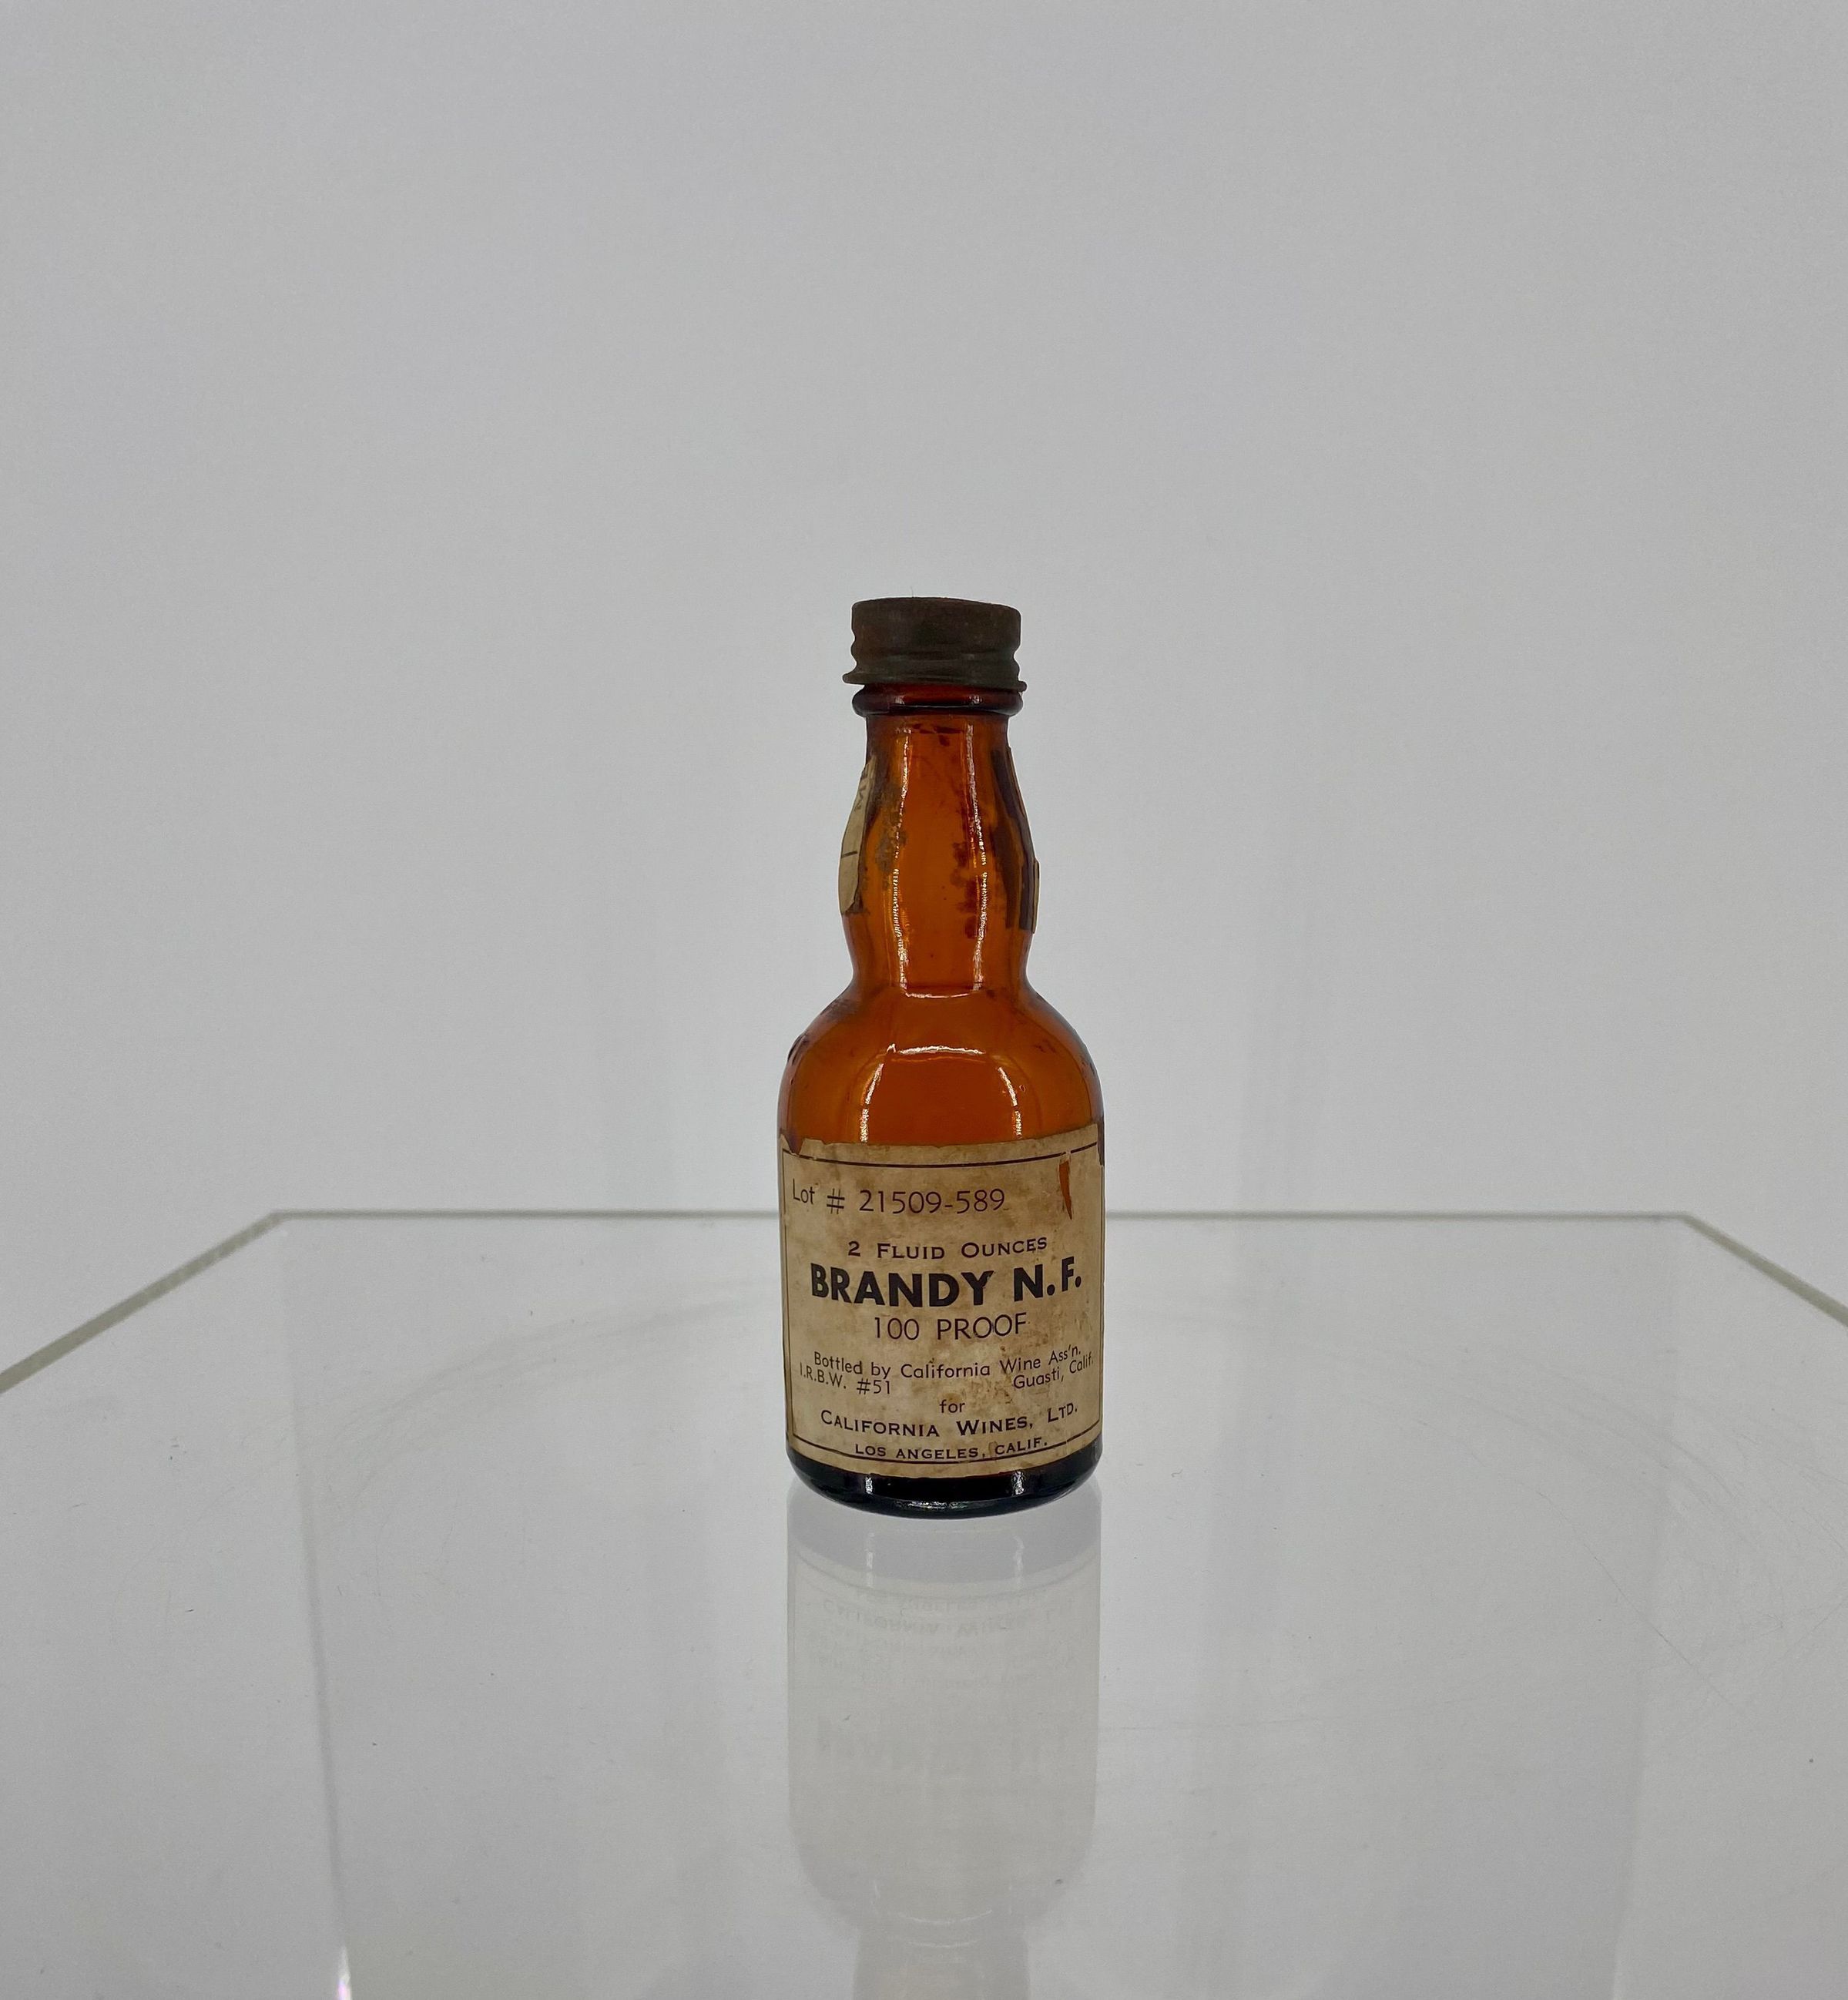 Primary Image of Medicinal Brandy Bottle